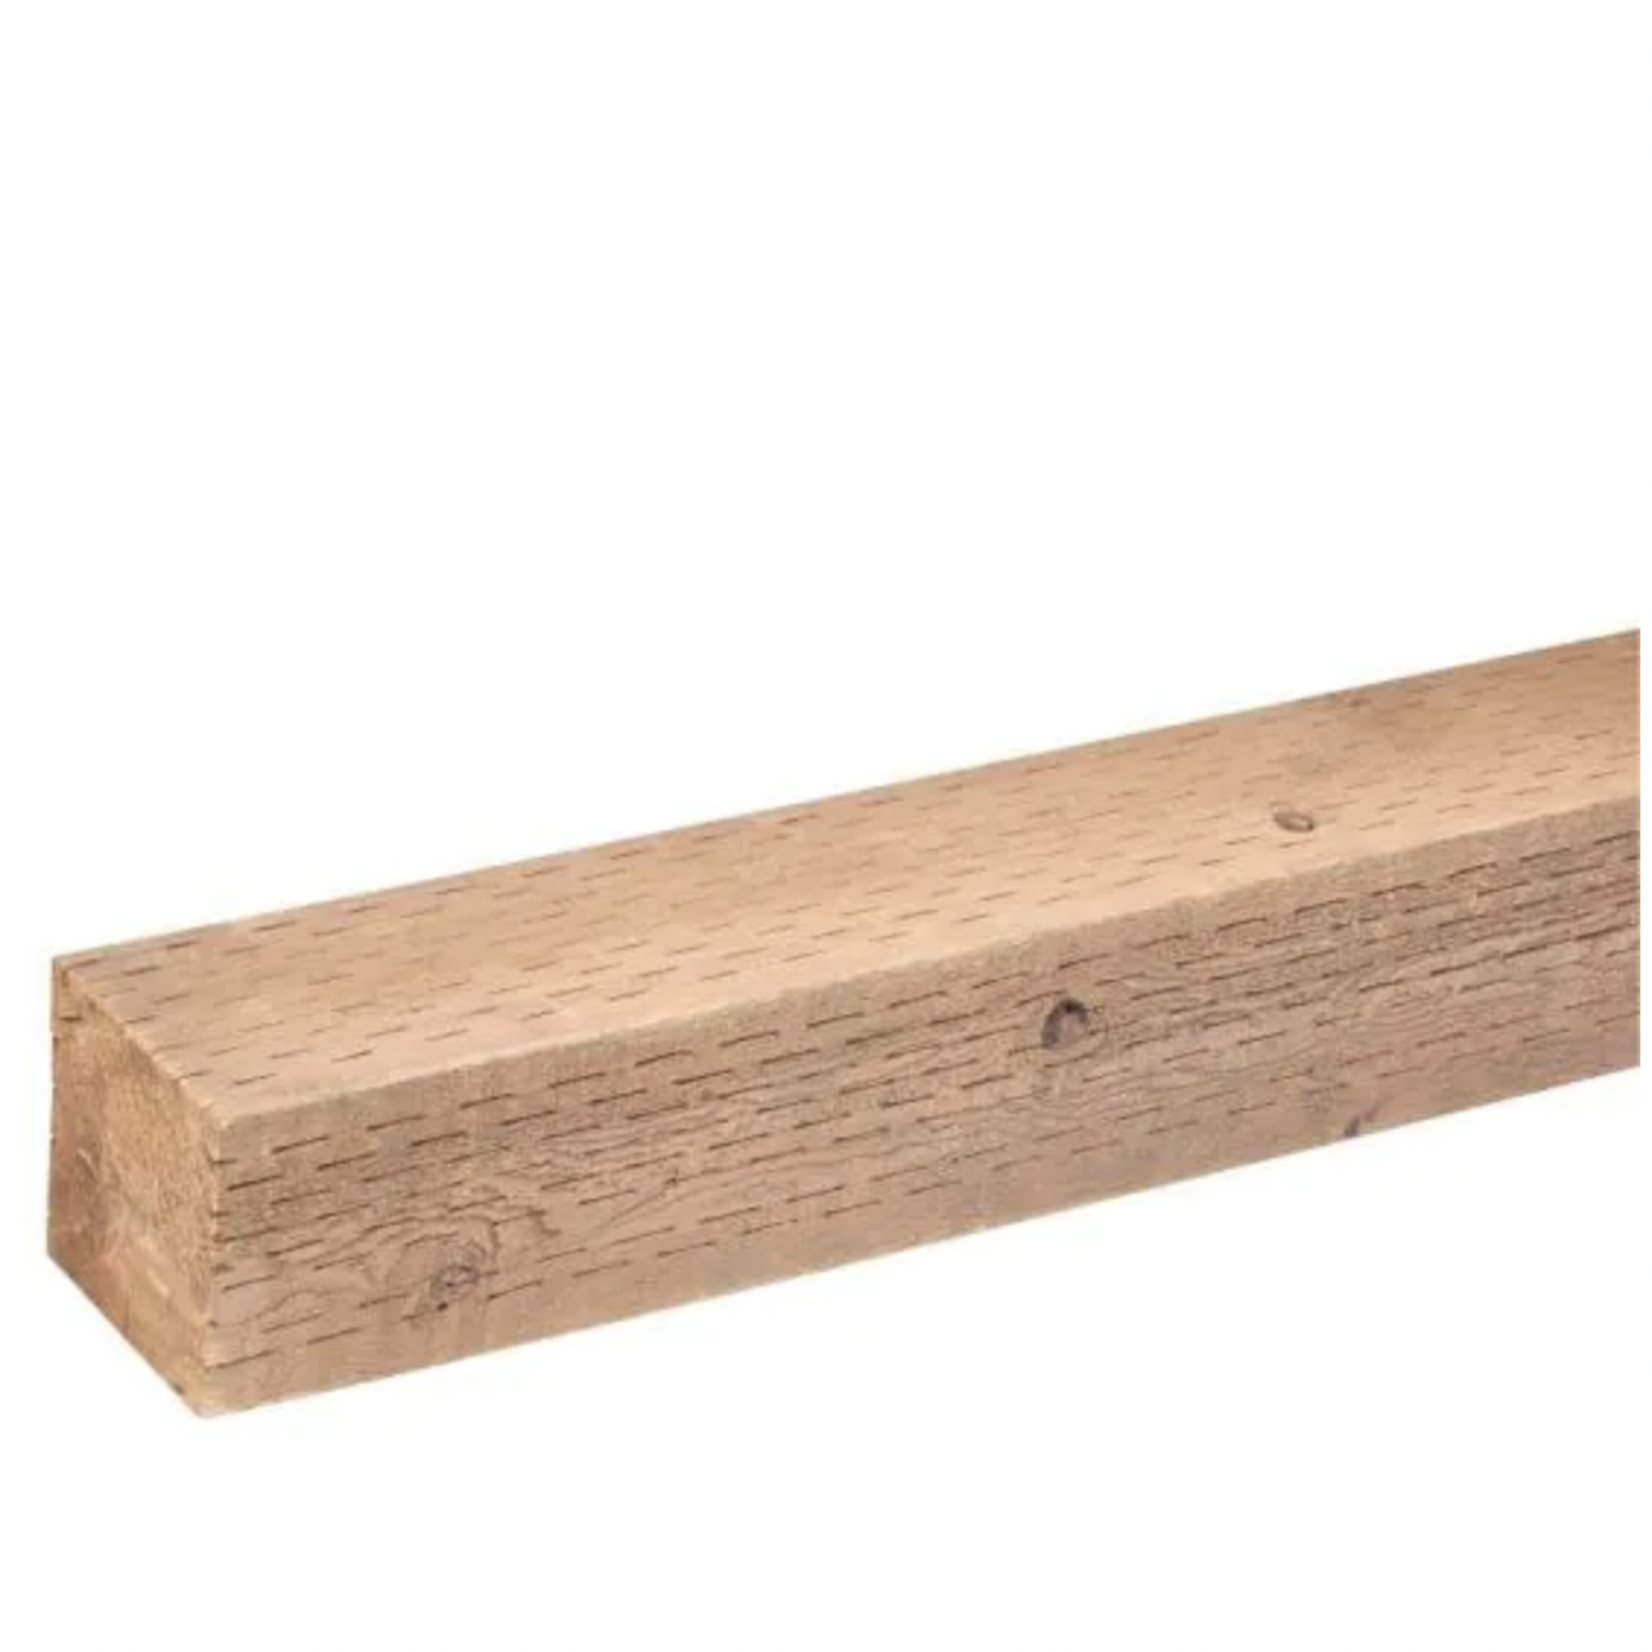 6 in. x 6 in. x 8 ft. Hem/Fir Pressure-Treated Lumber